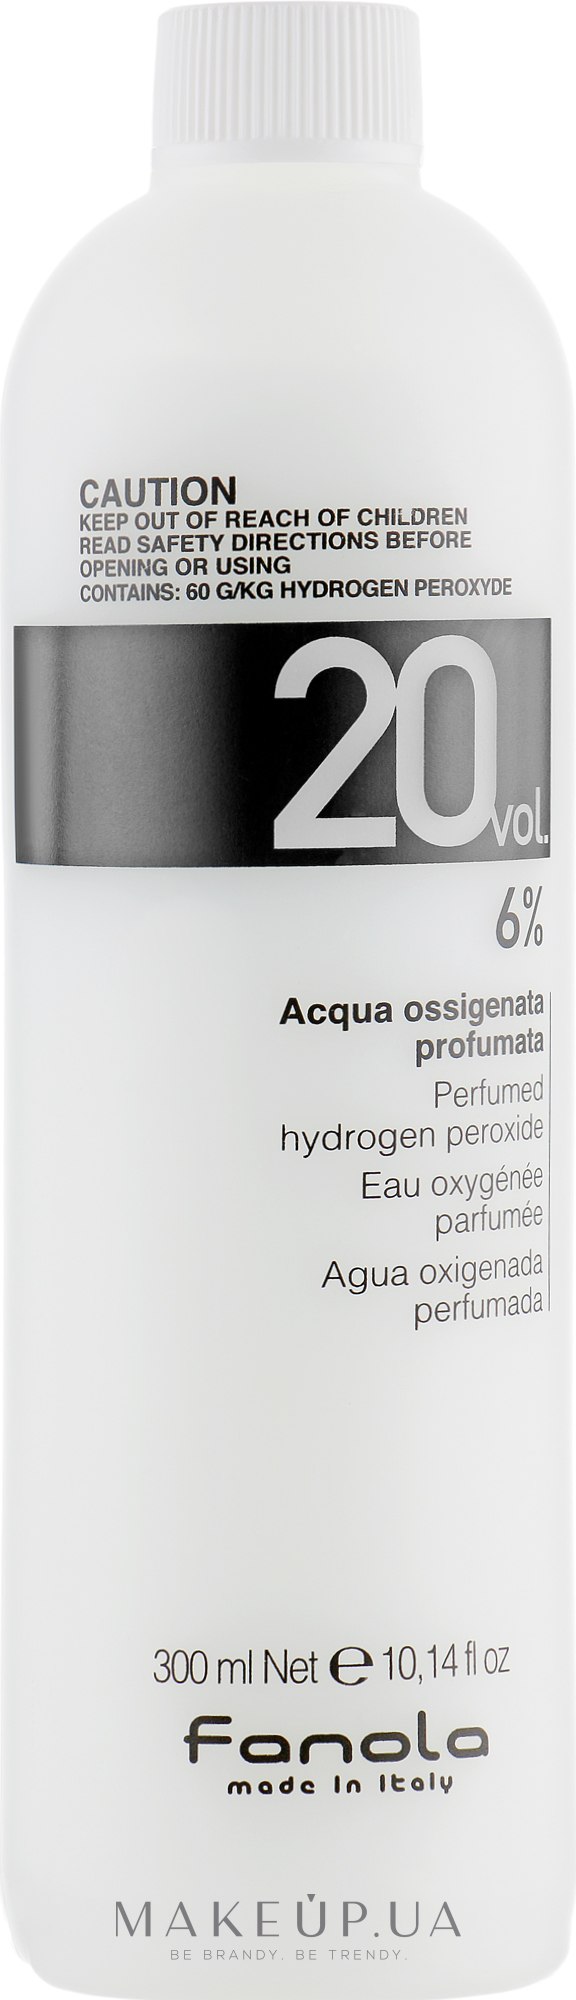 Окислювач 20 vol 6% - Fanola Perfumed Hydrogen Peroxide Hair Oxidant — фото 300ml